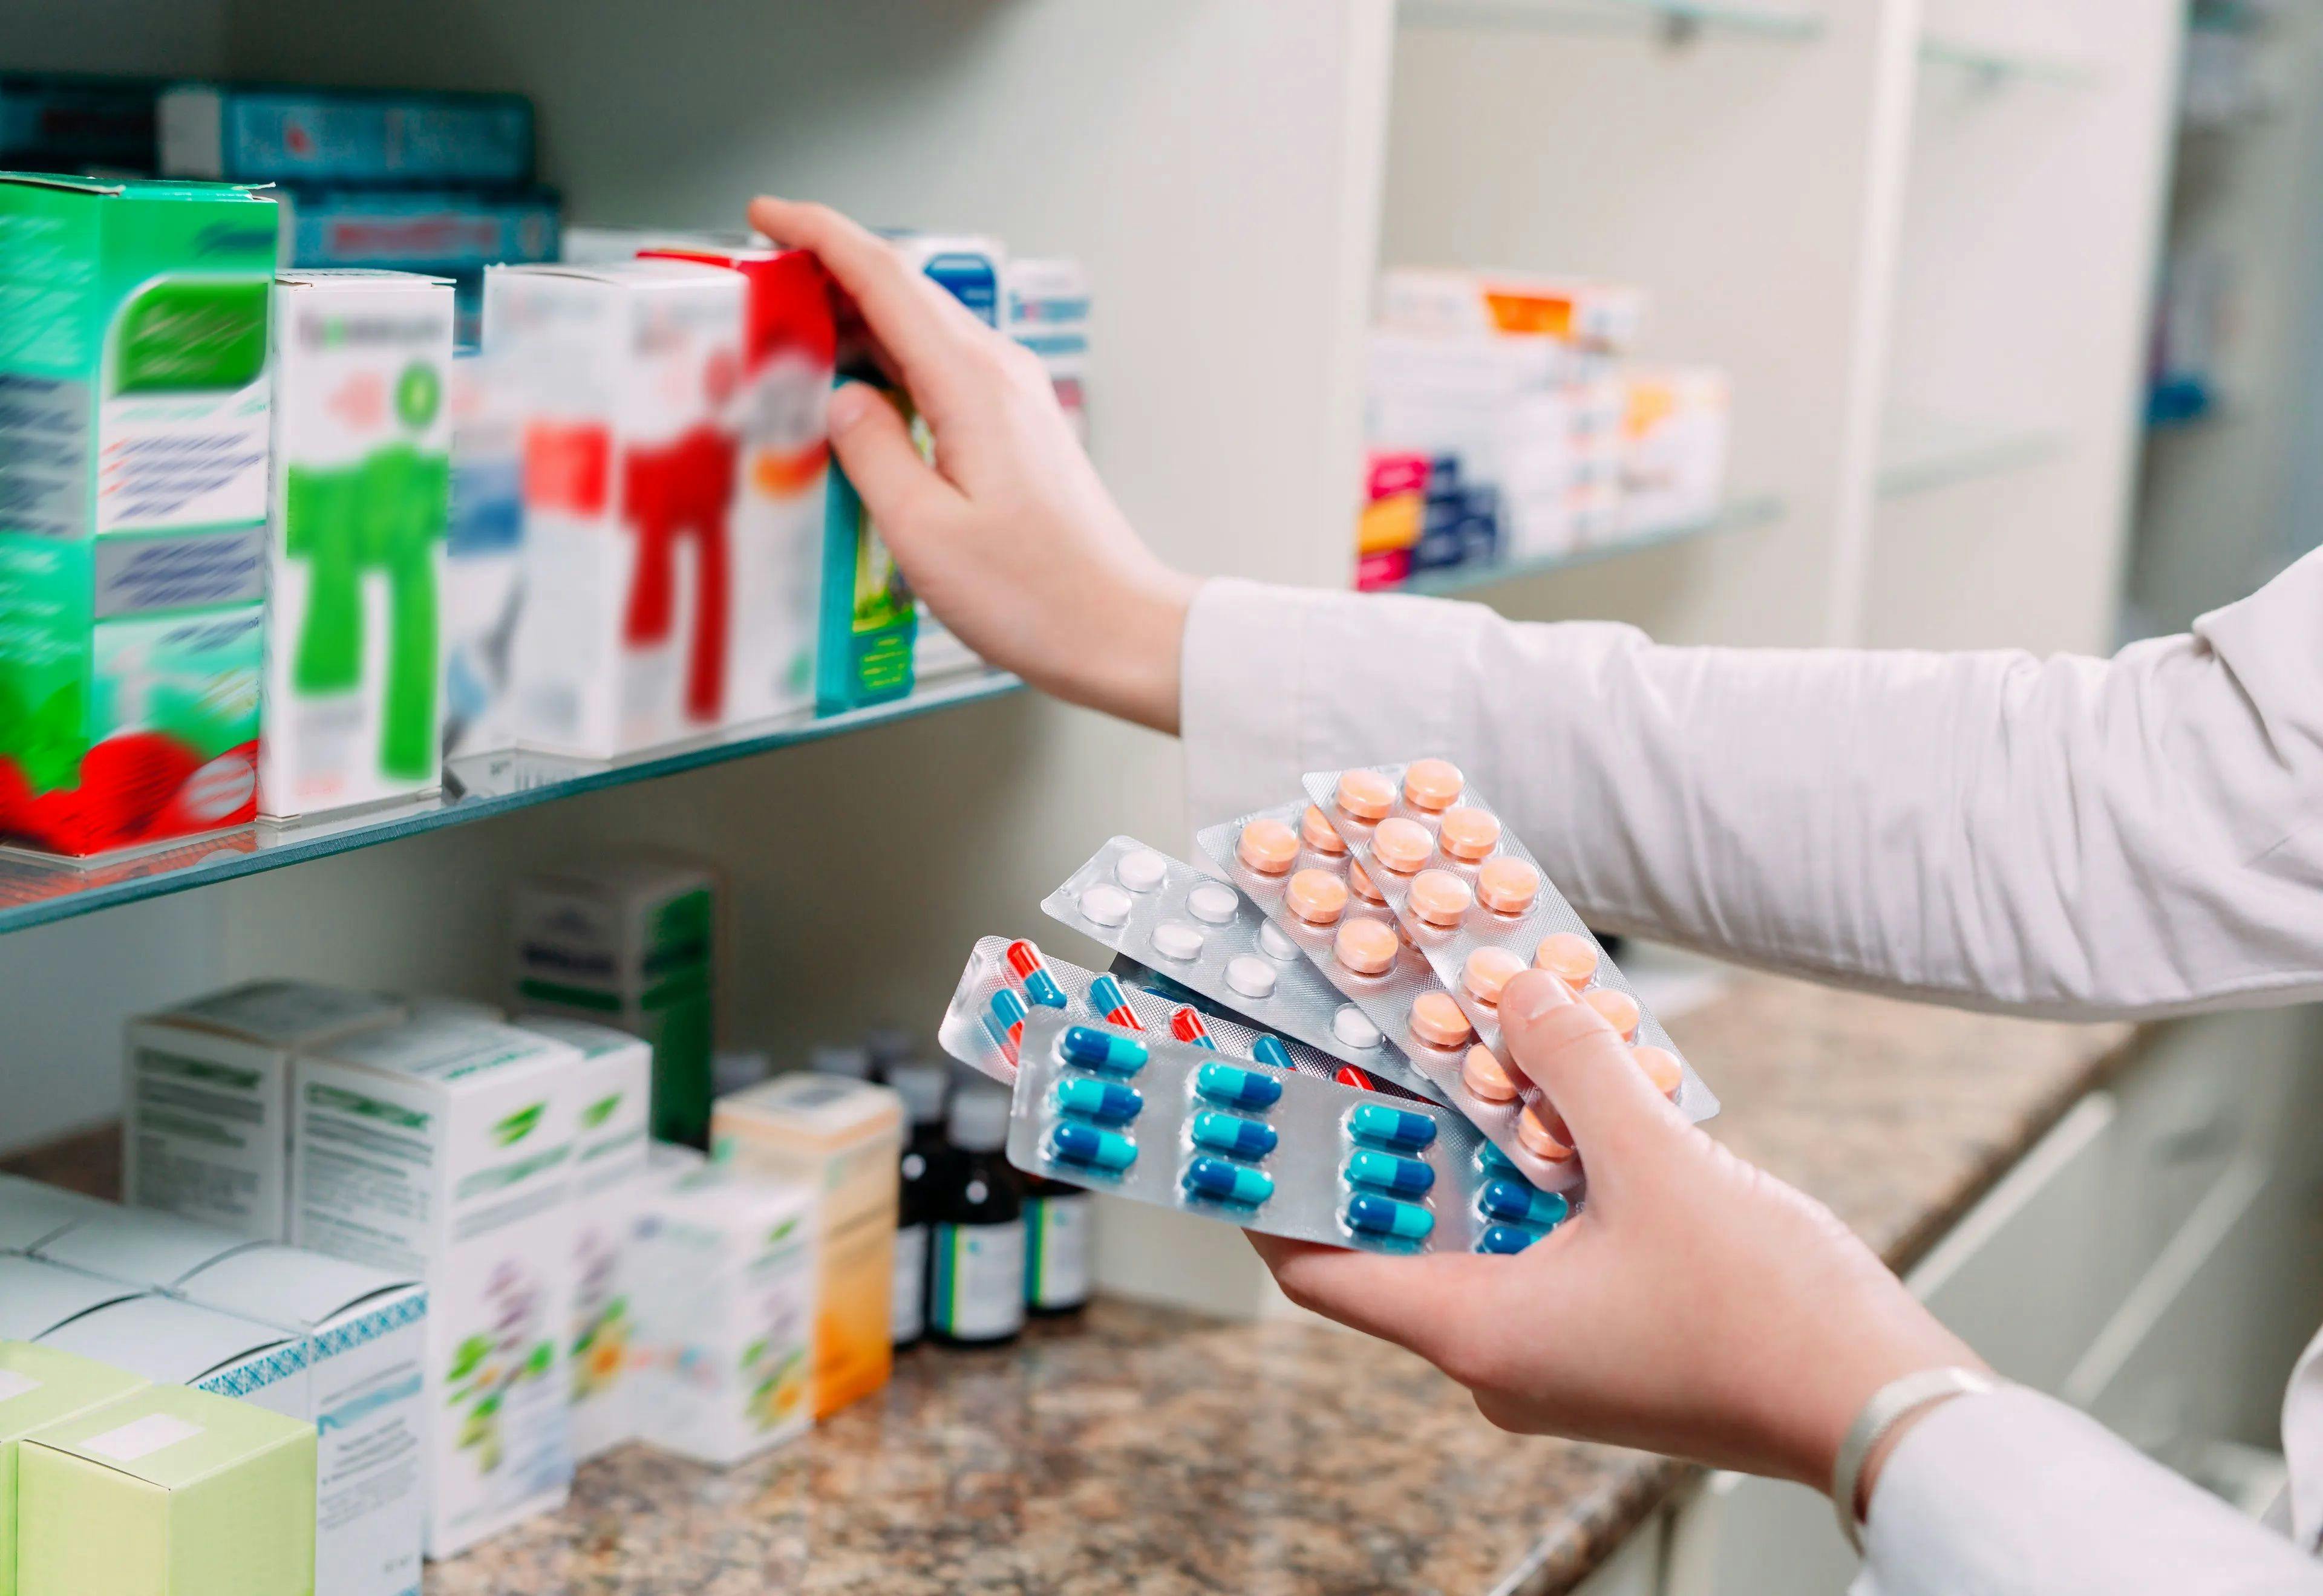 pharmacist holding pill packs | Image credit: davit85 | stock.adobe.com